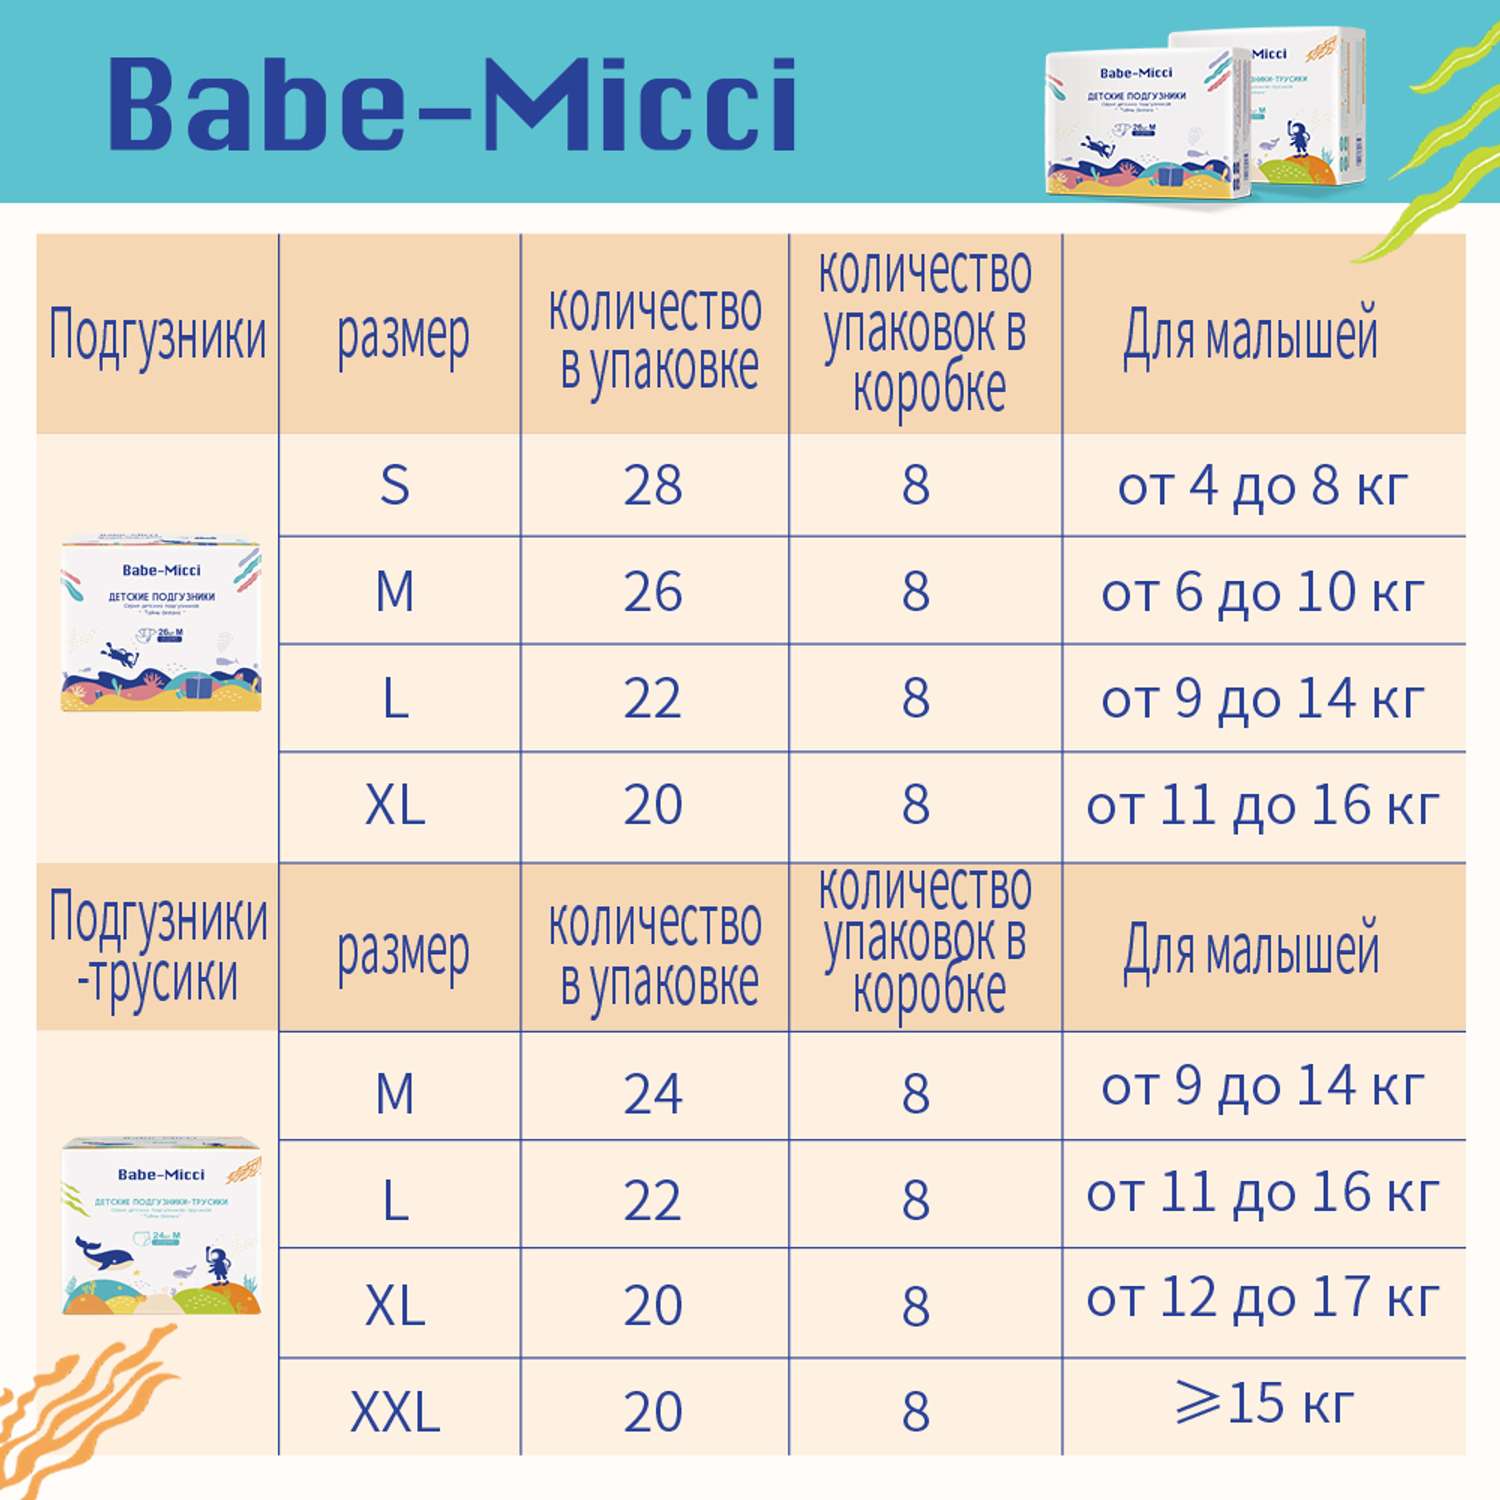 Подгузники детские Babe-Micci 4-8 кг размер S 28 шт - фото 3